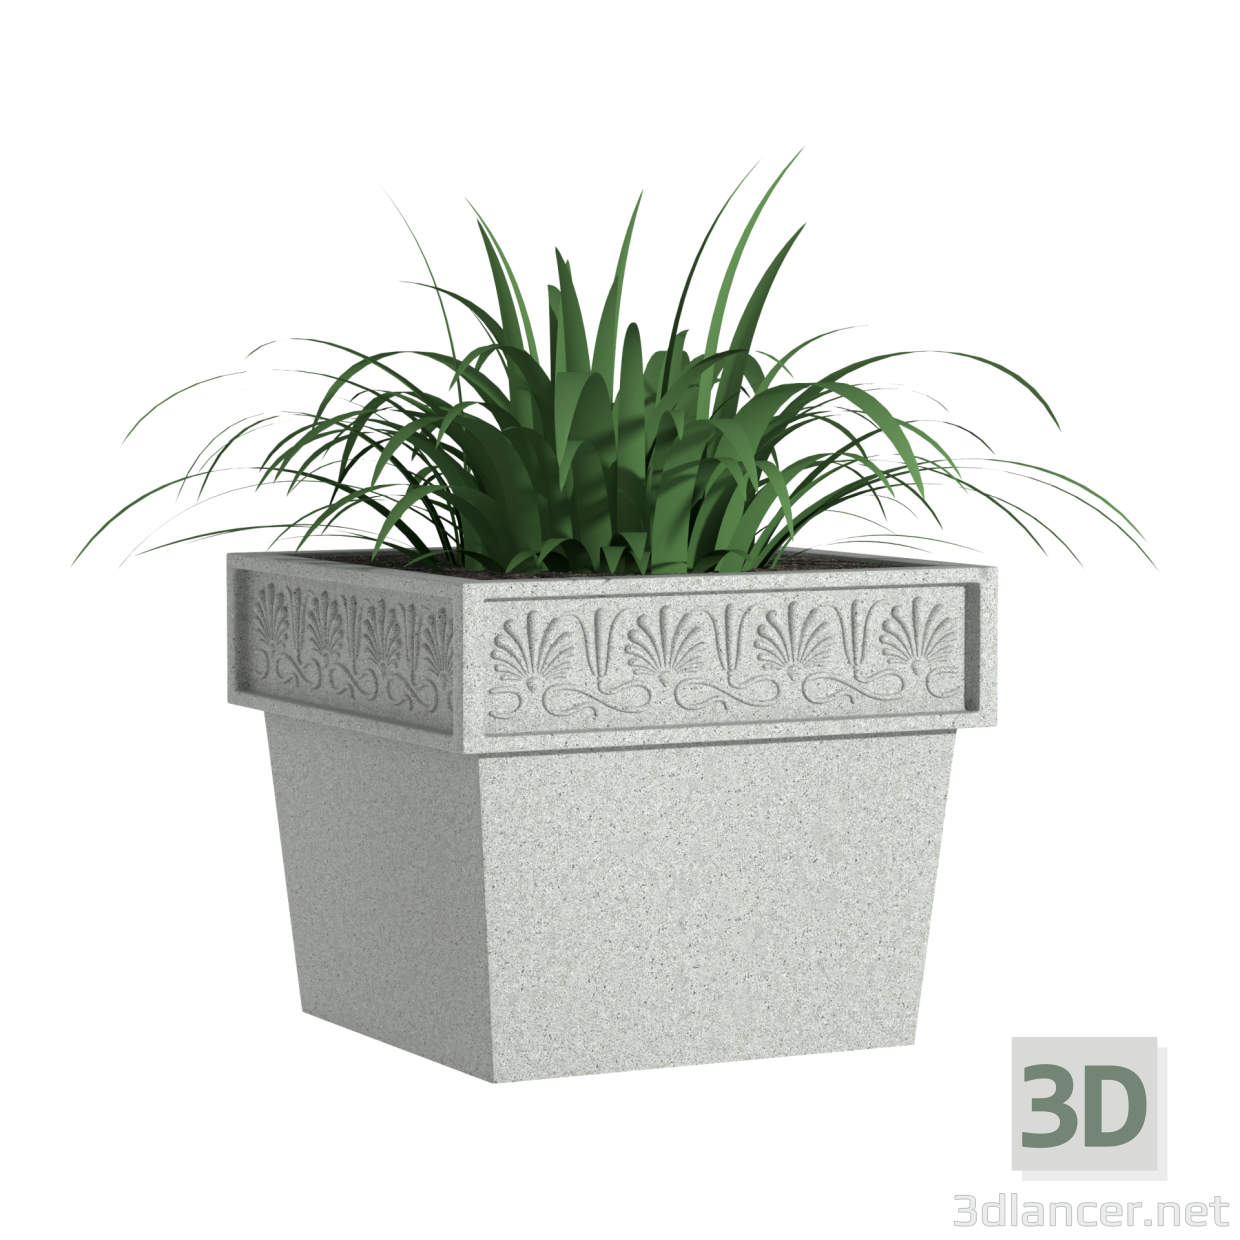 Blumentopf K2 3D-Modell kaufen - Rendern